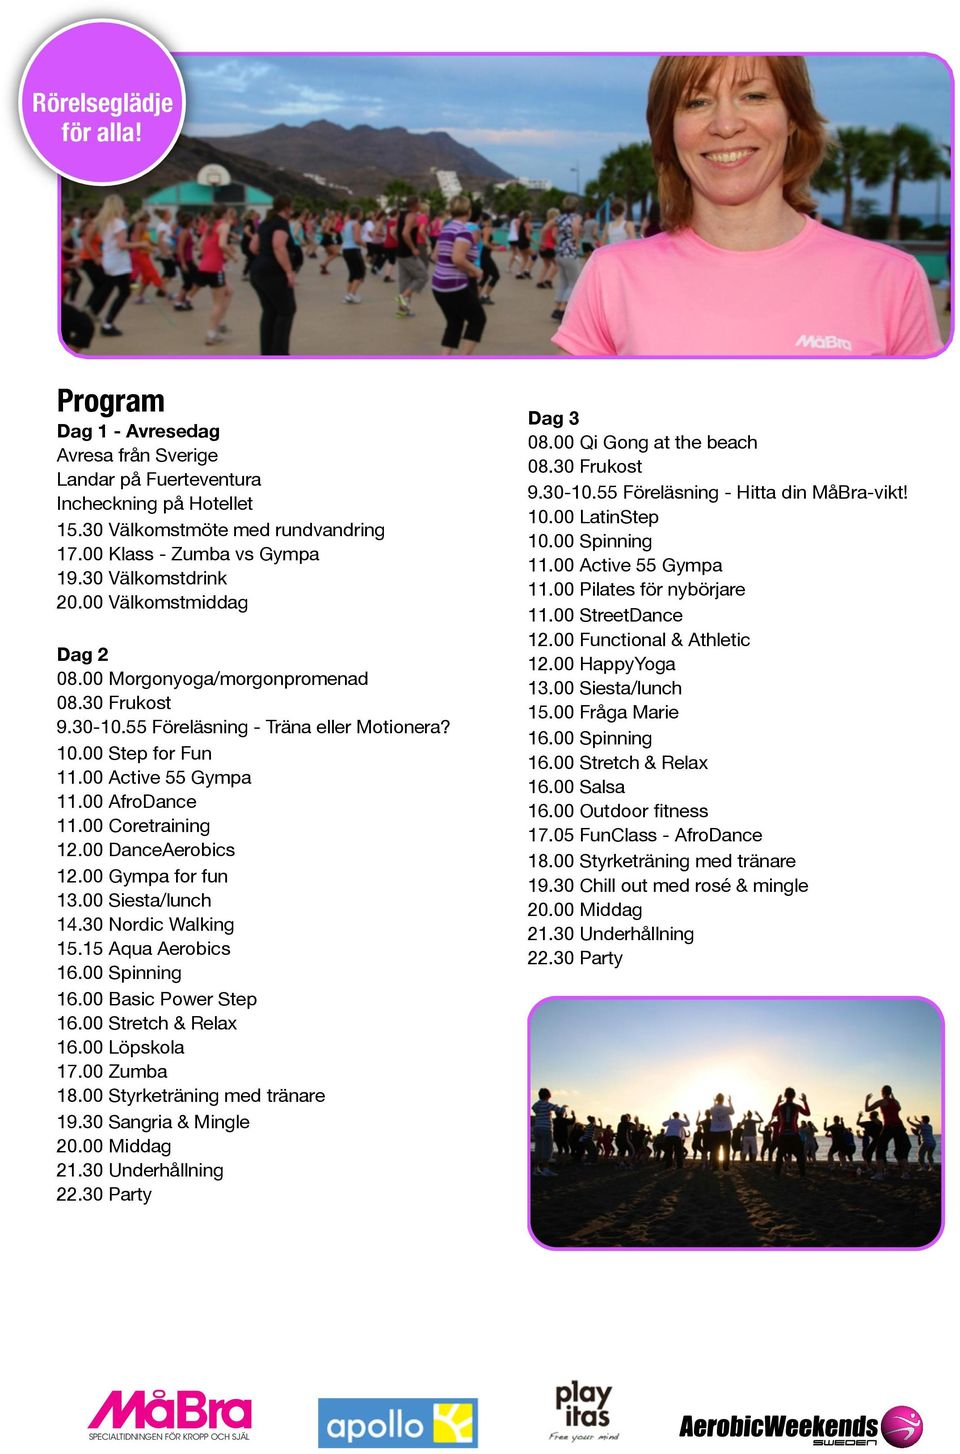 00 DanceAerobics 12.00 Gympa for fun 14.30 Nordic Walking 16.00 Basic Power Step 16.00 Löpskola 17.00 Zumba 18.00 Styrketräning med tränare 19.30 Sangria & Mingle Dag 3 08.00 Qi Gong at the beach 9.